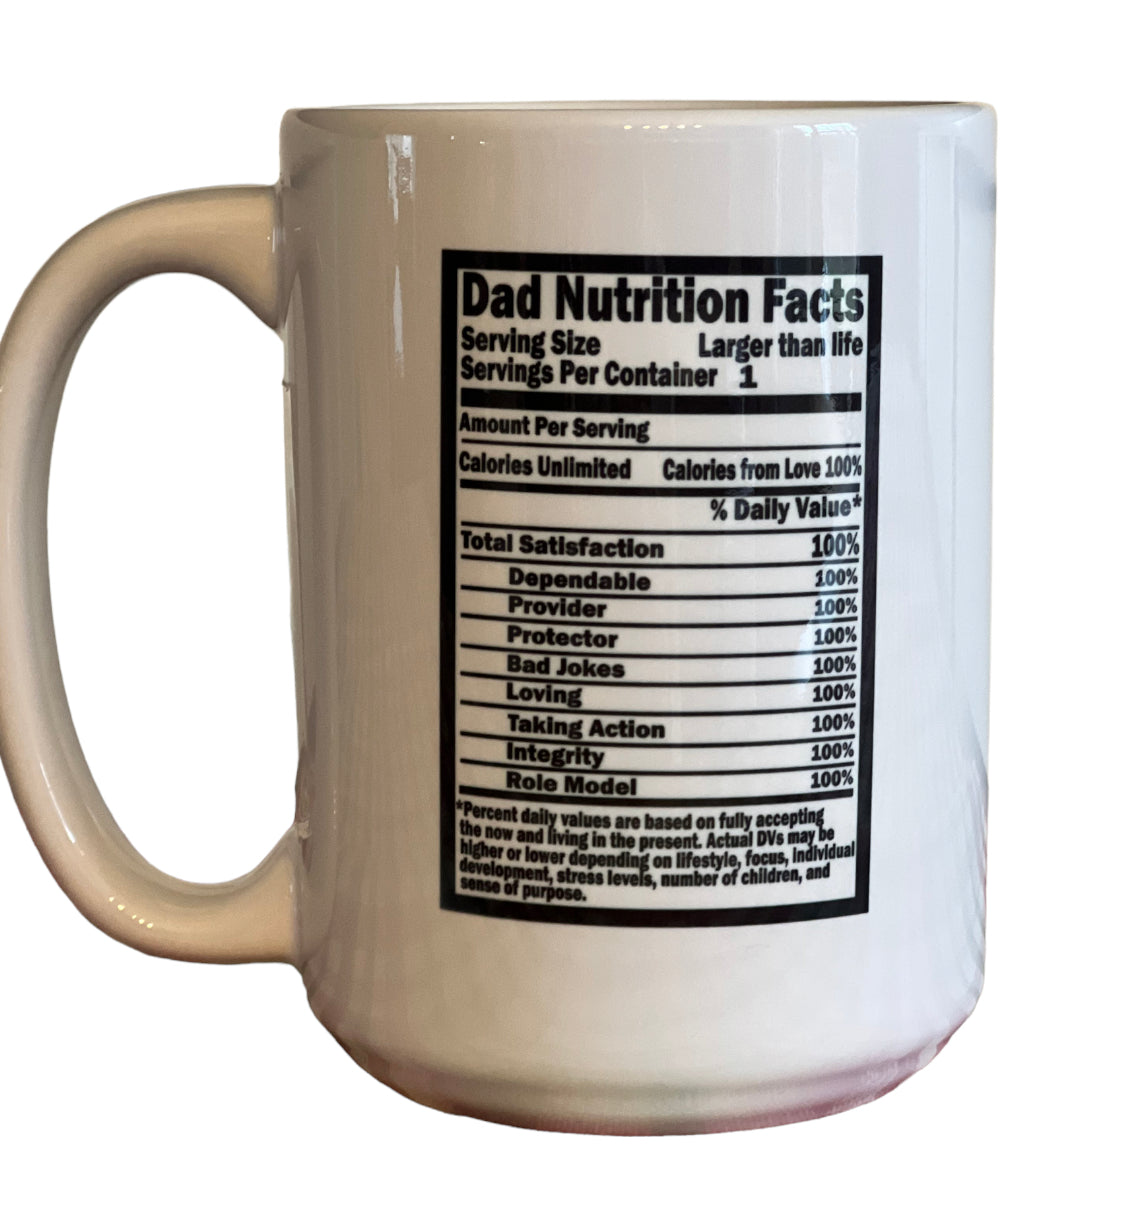 Dad nutritional facts coffee mug